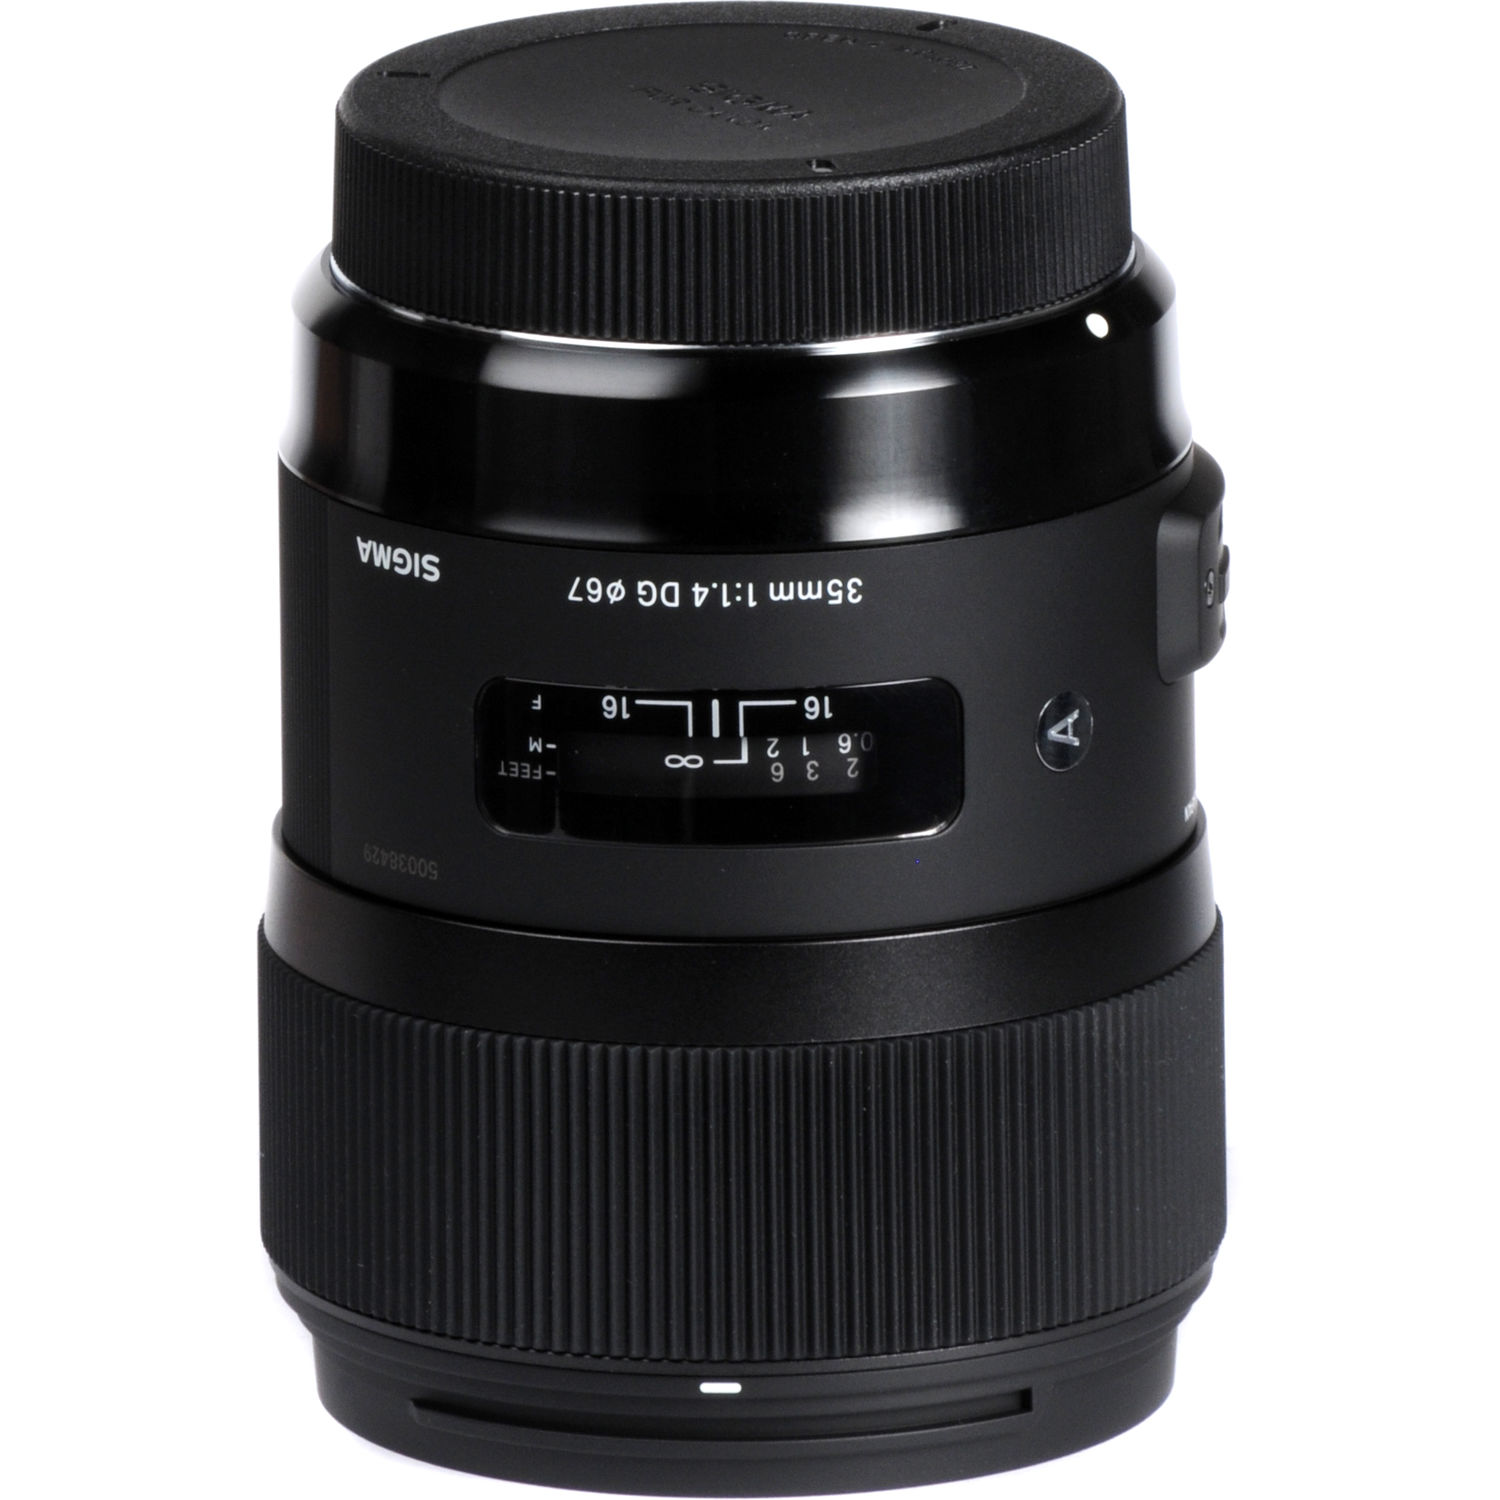 Sigma 35mm F 1 4 Dg Hsm Art Lens For Sony A 3405 B H Photo